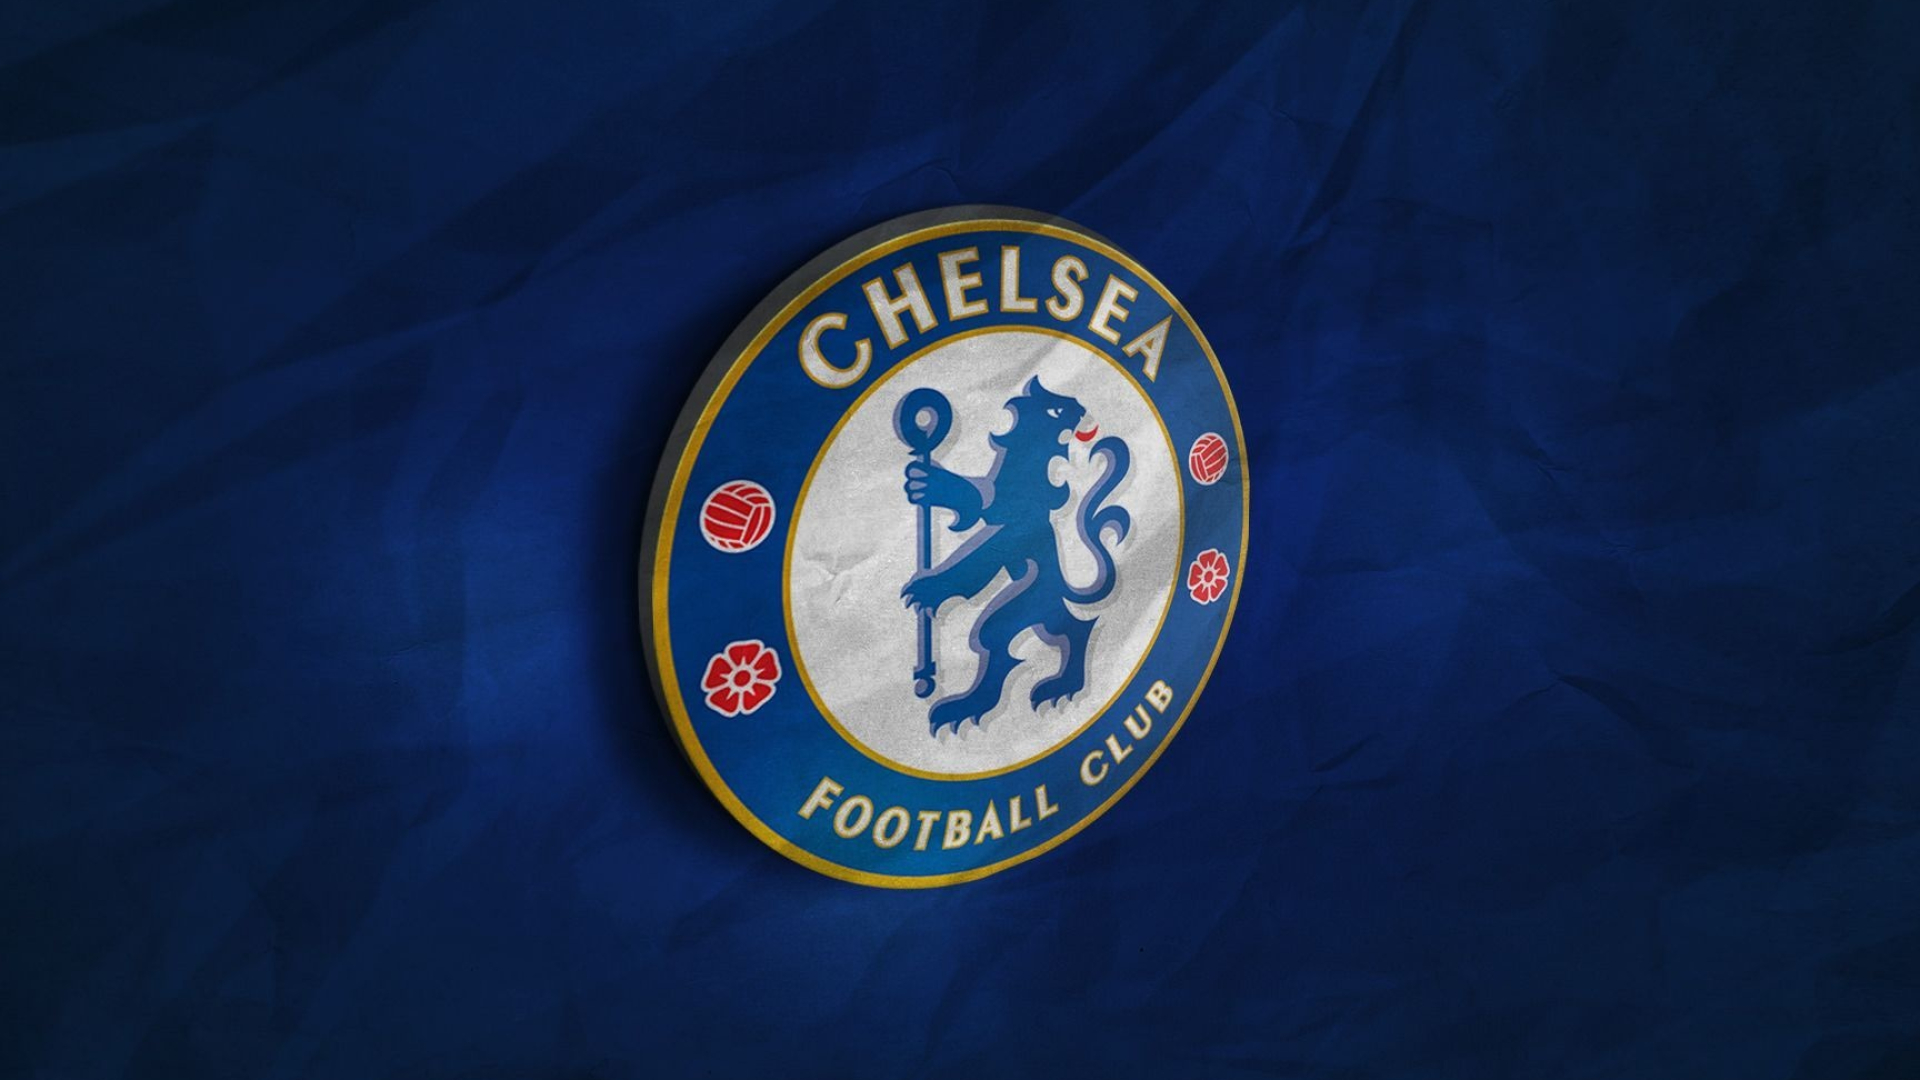 Chelsea logo, Sports team, Chelsea logo wallpapers, Chelsea logo backgrounds, 1920x1080 Full HD Desktop